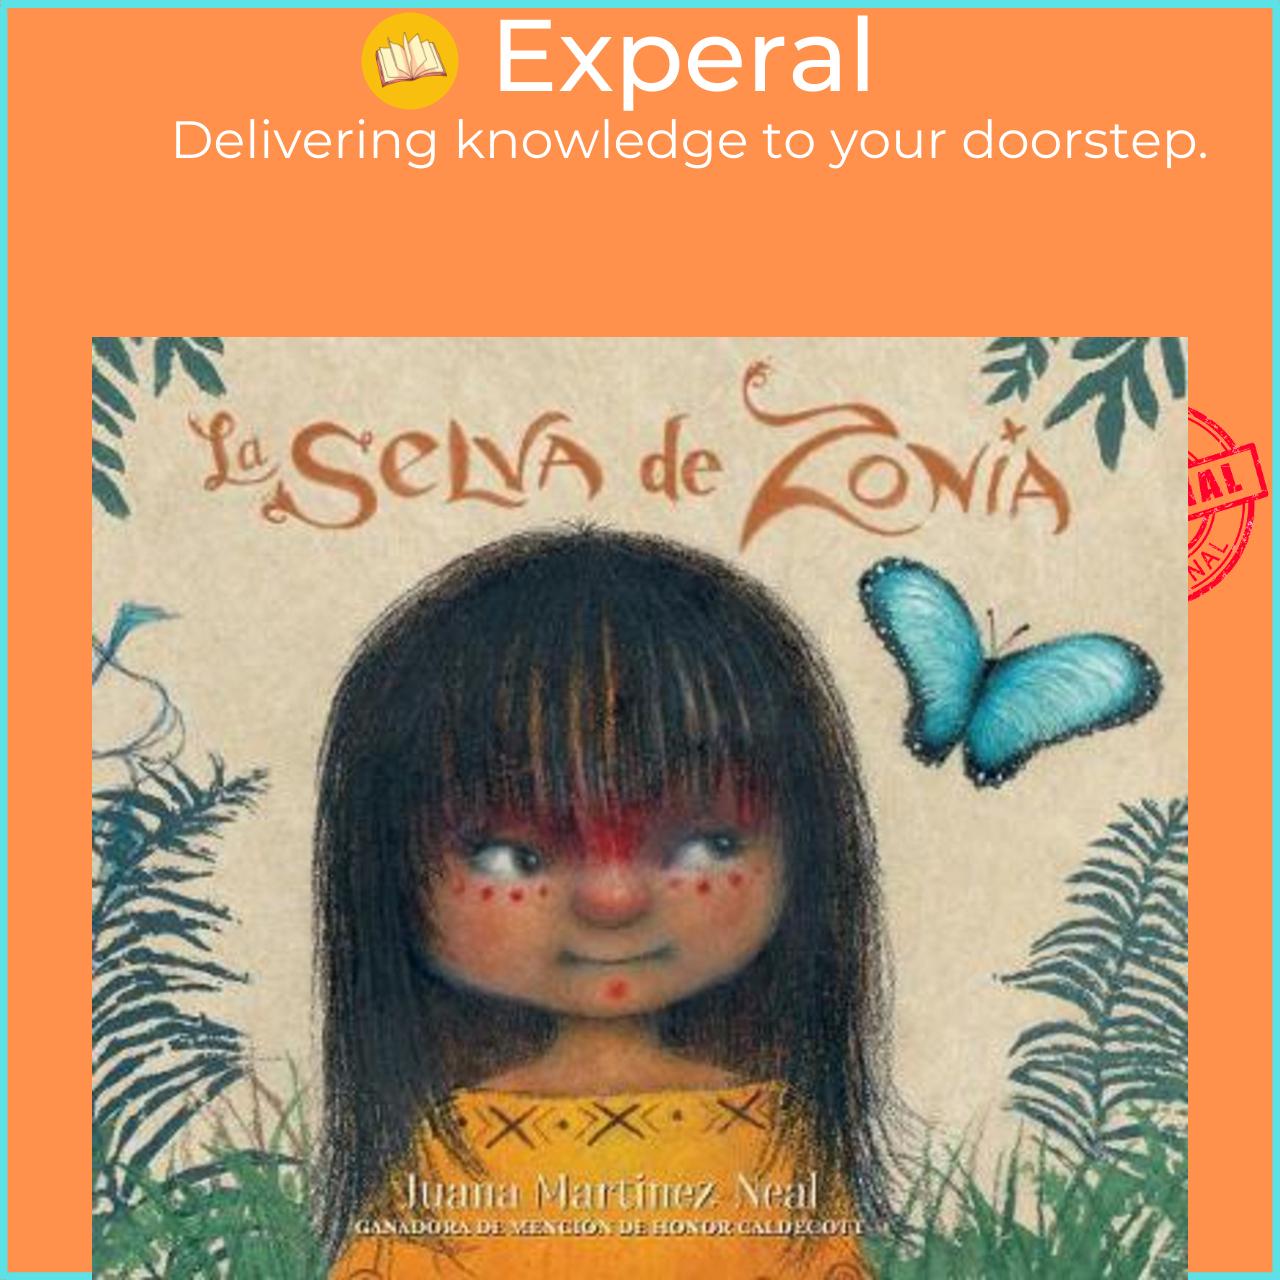 Sách - La selva de Zonia by Juana Martinez-Neal (US edition, hardcover)